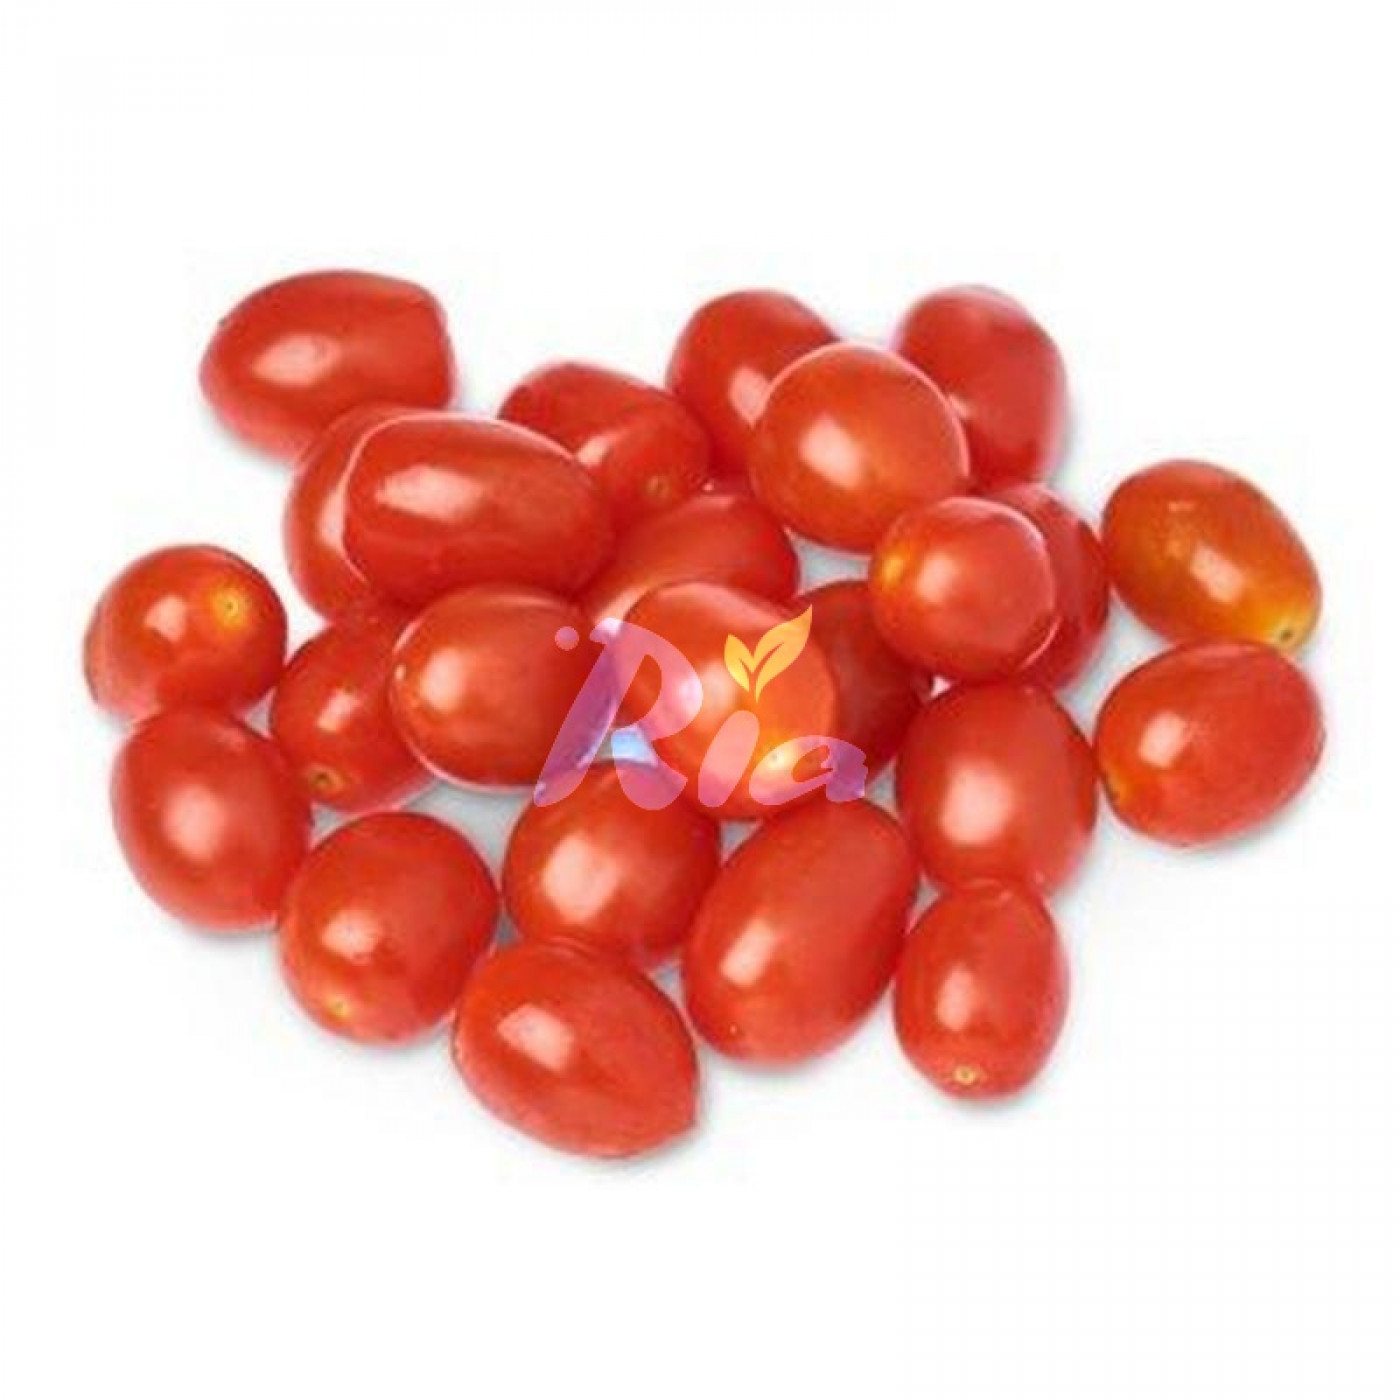 Cherry Tomato 250G